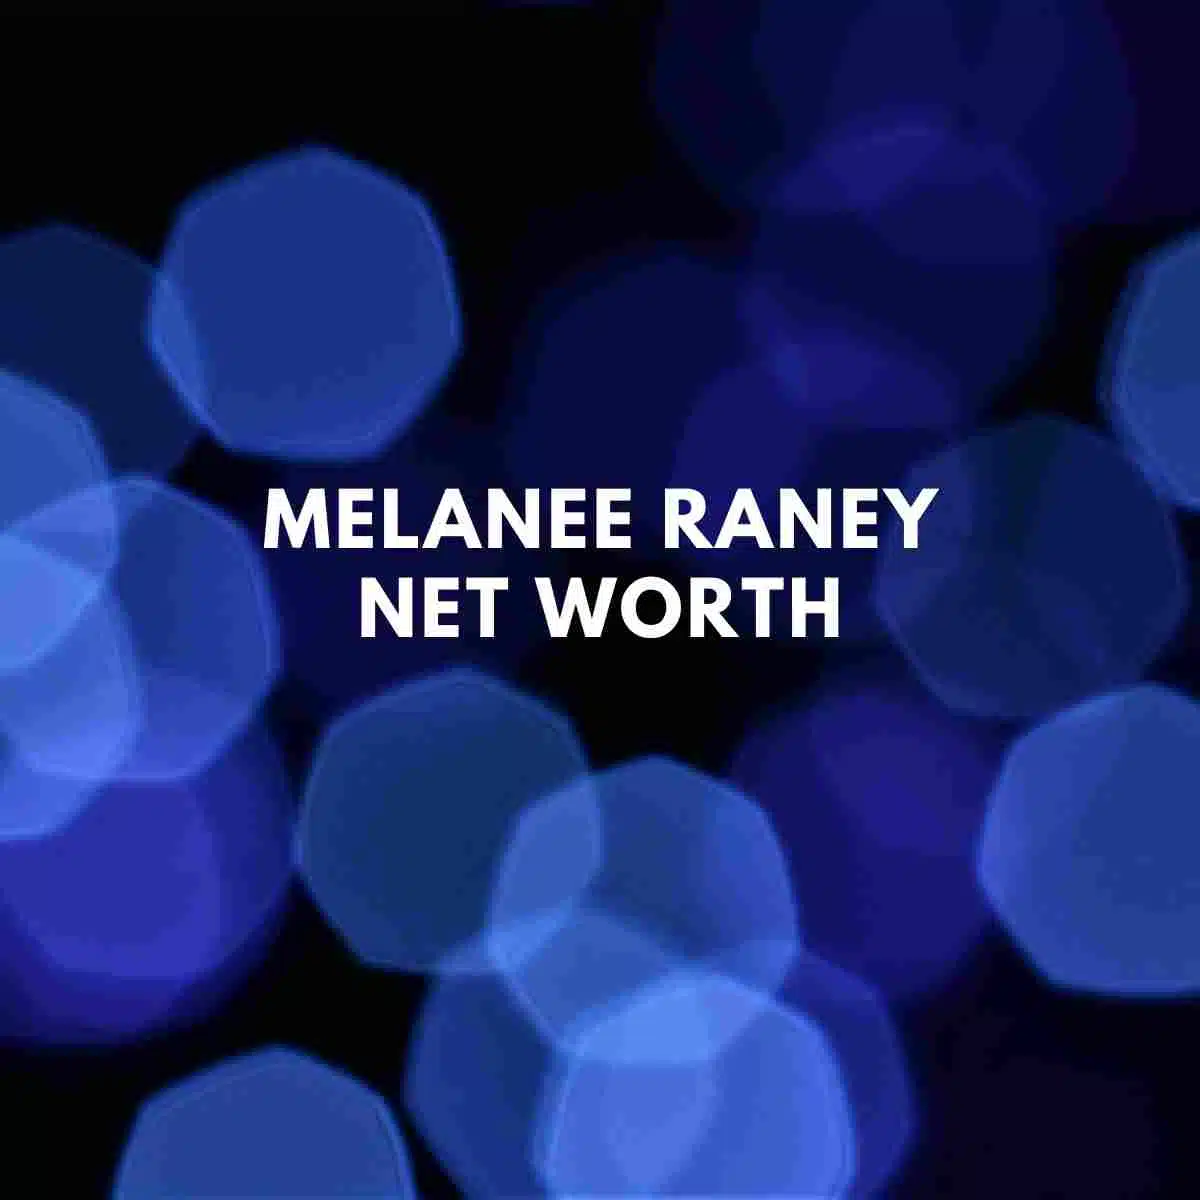 Melanee Raney net worth